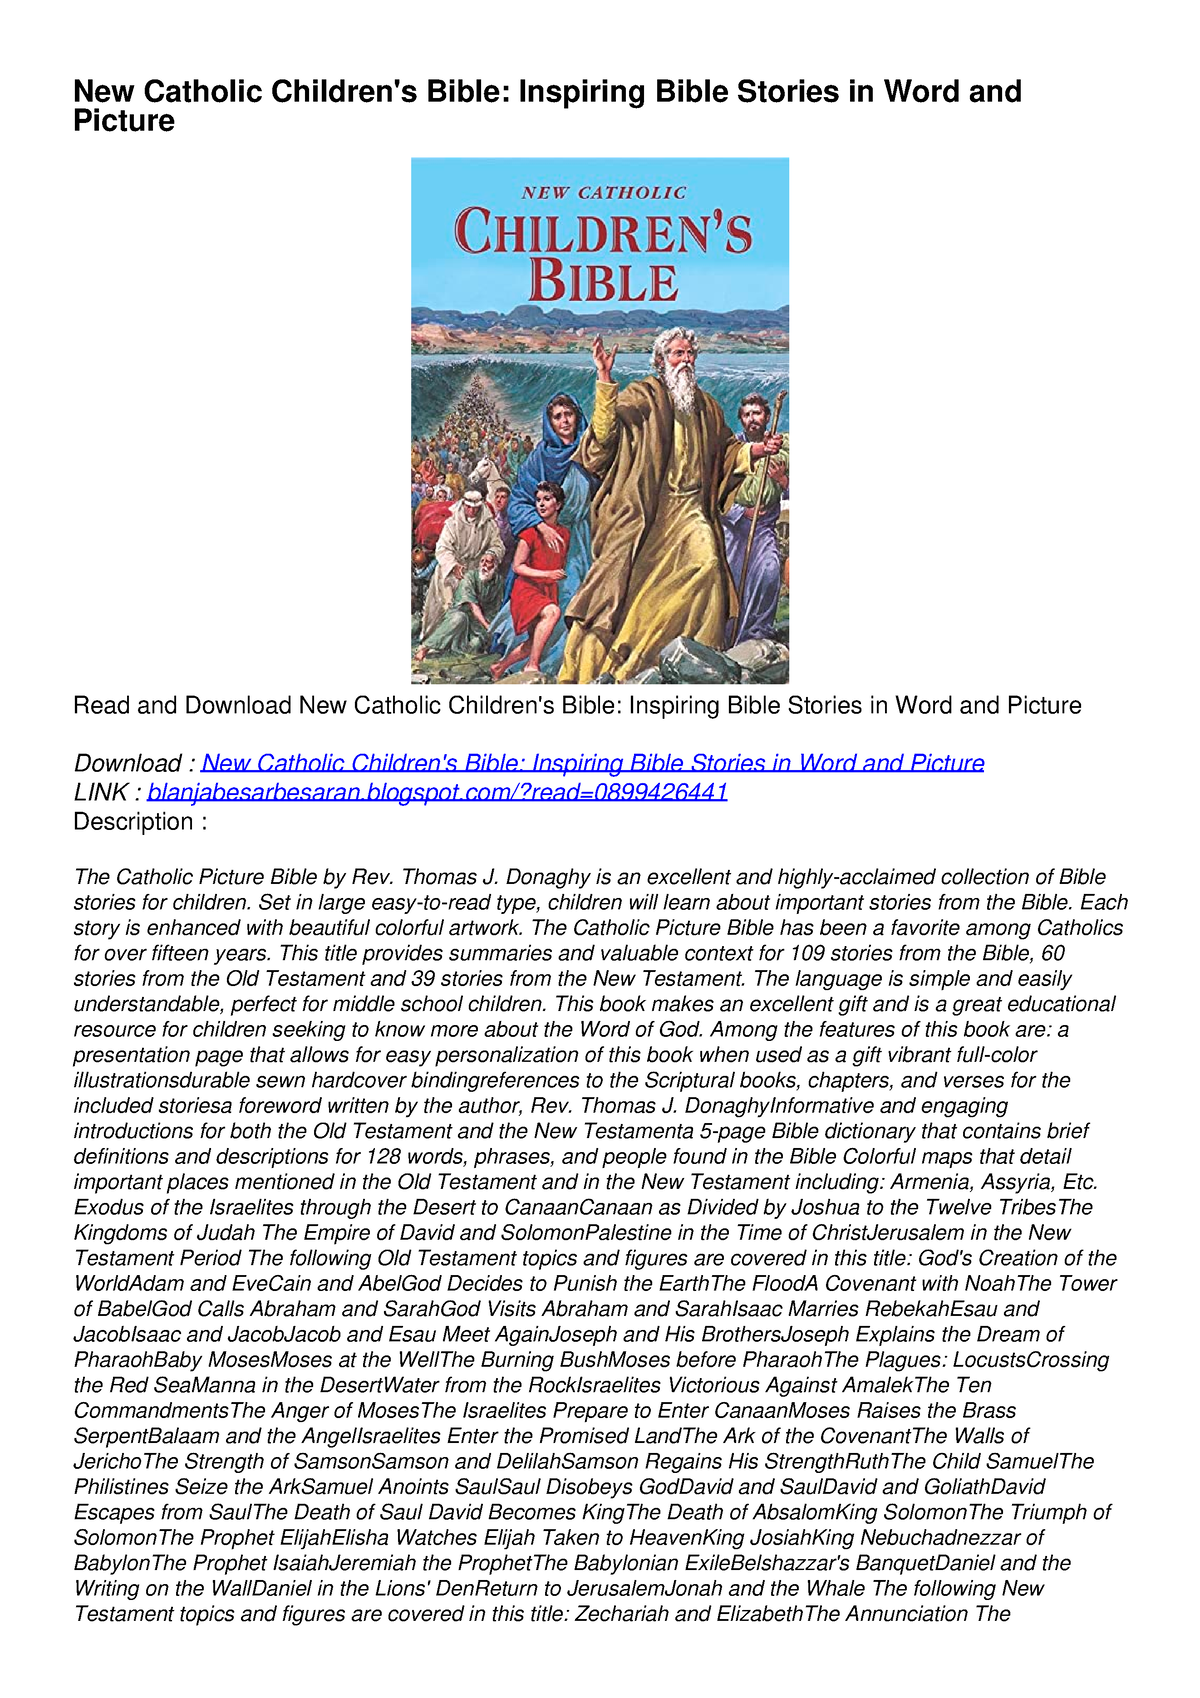 PDF KINDLE DOWNLOAD New Catholic Children's Bible: Inspiring Bible ...